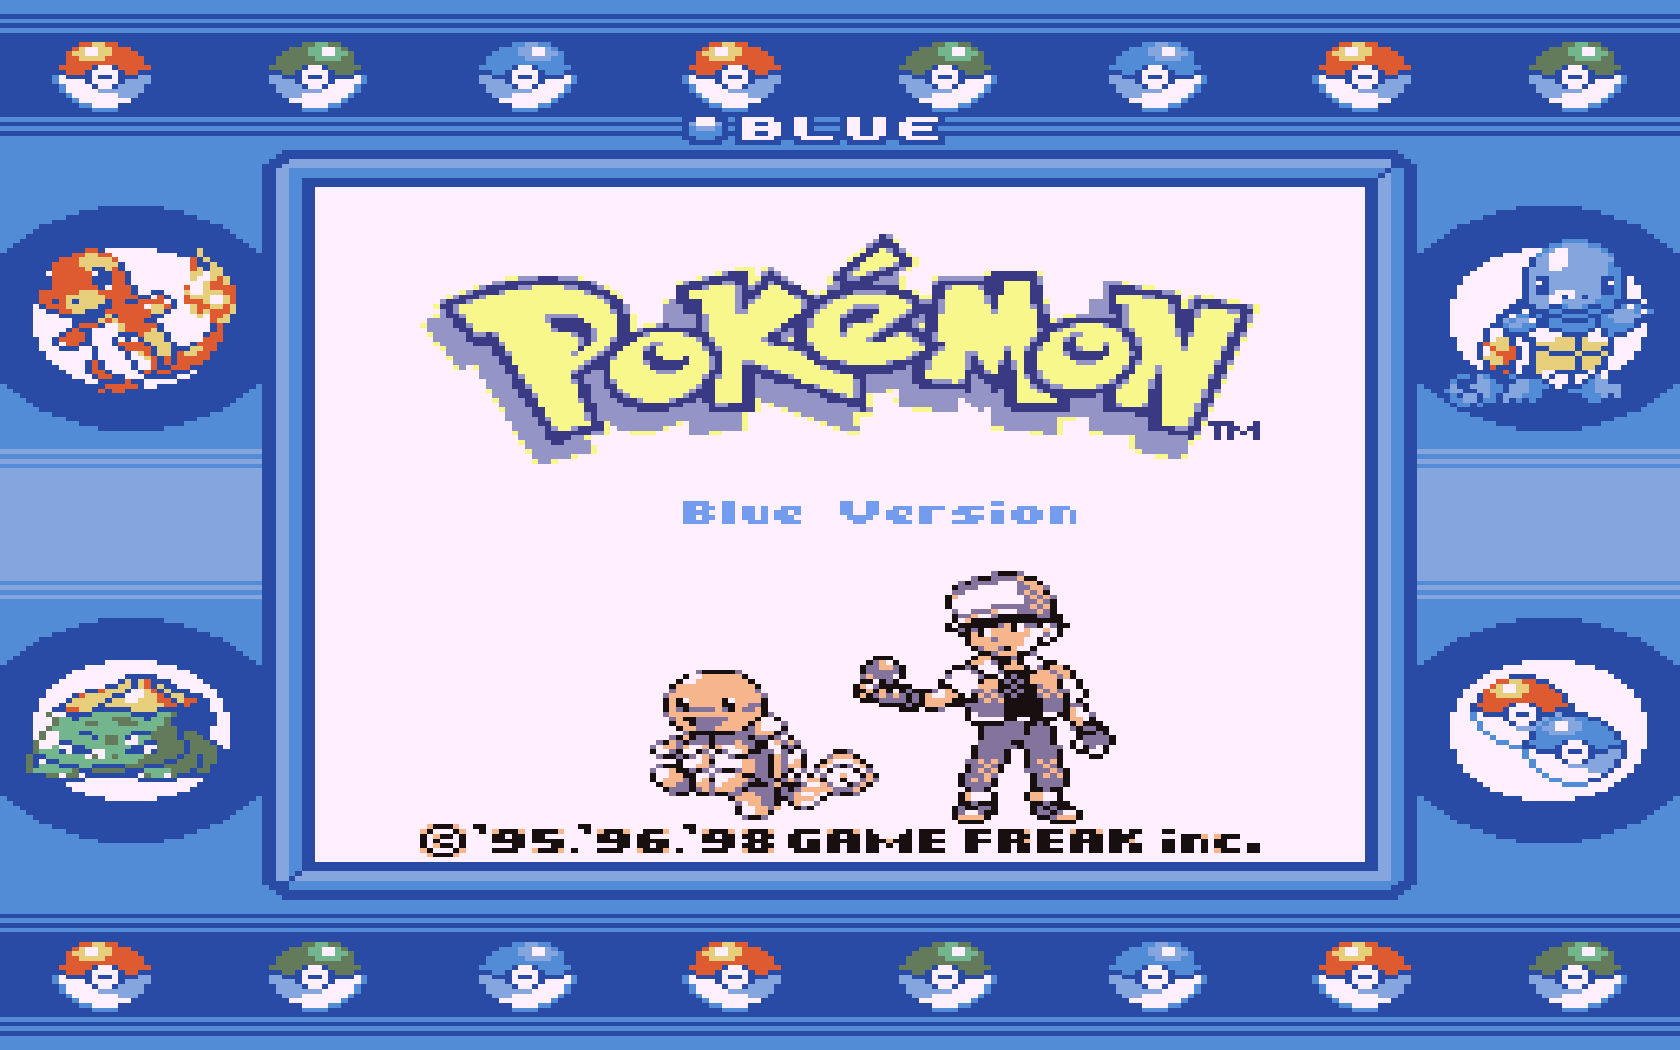 download pokemon blue gb rom